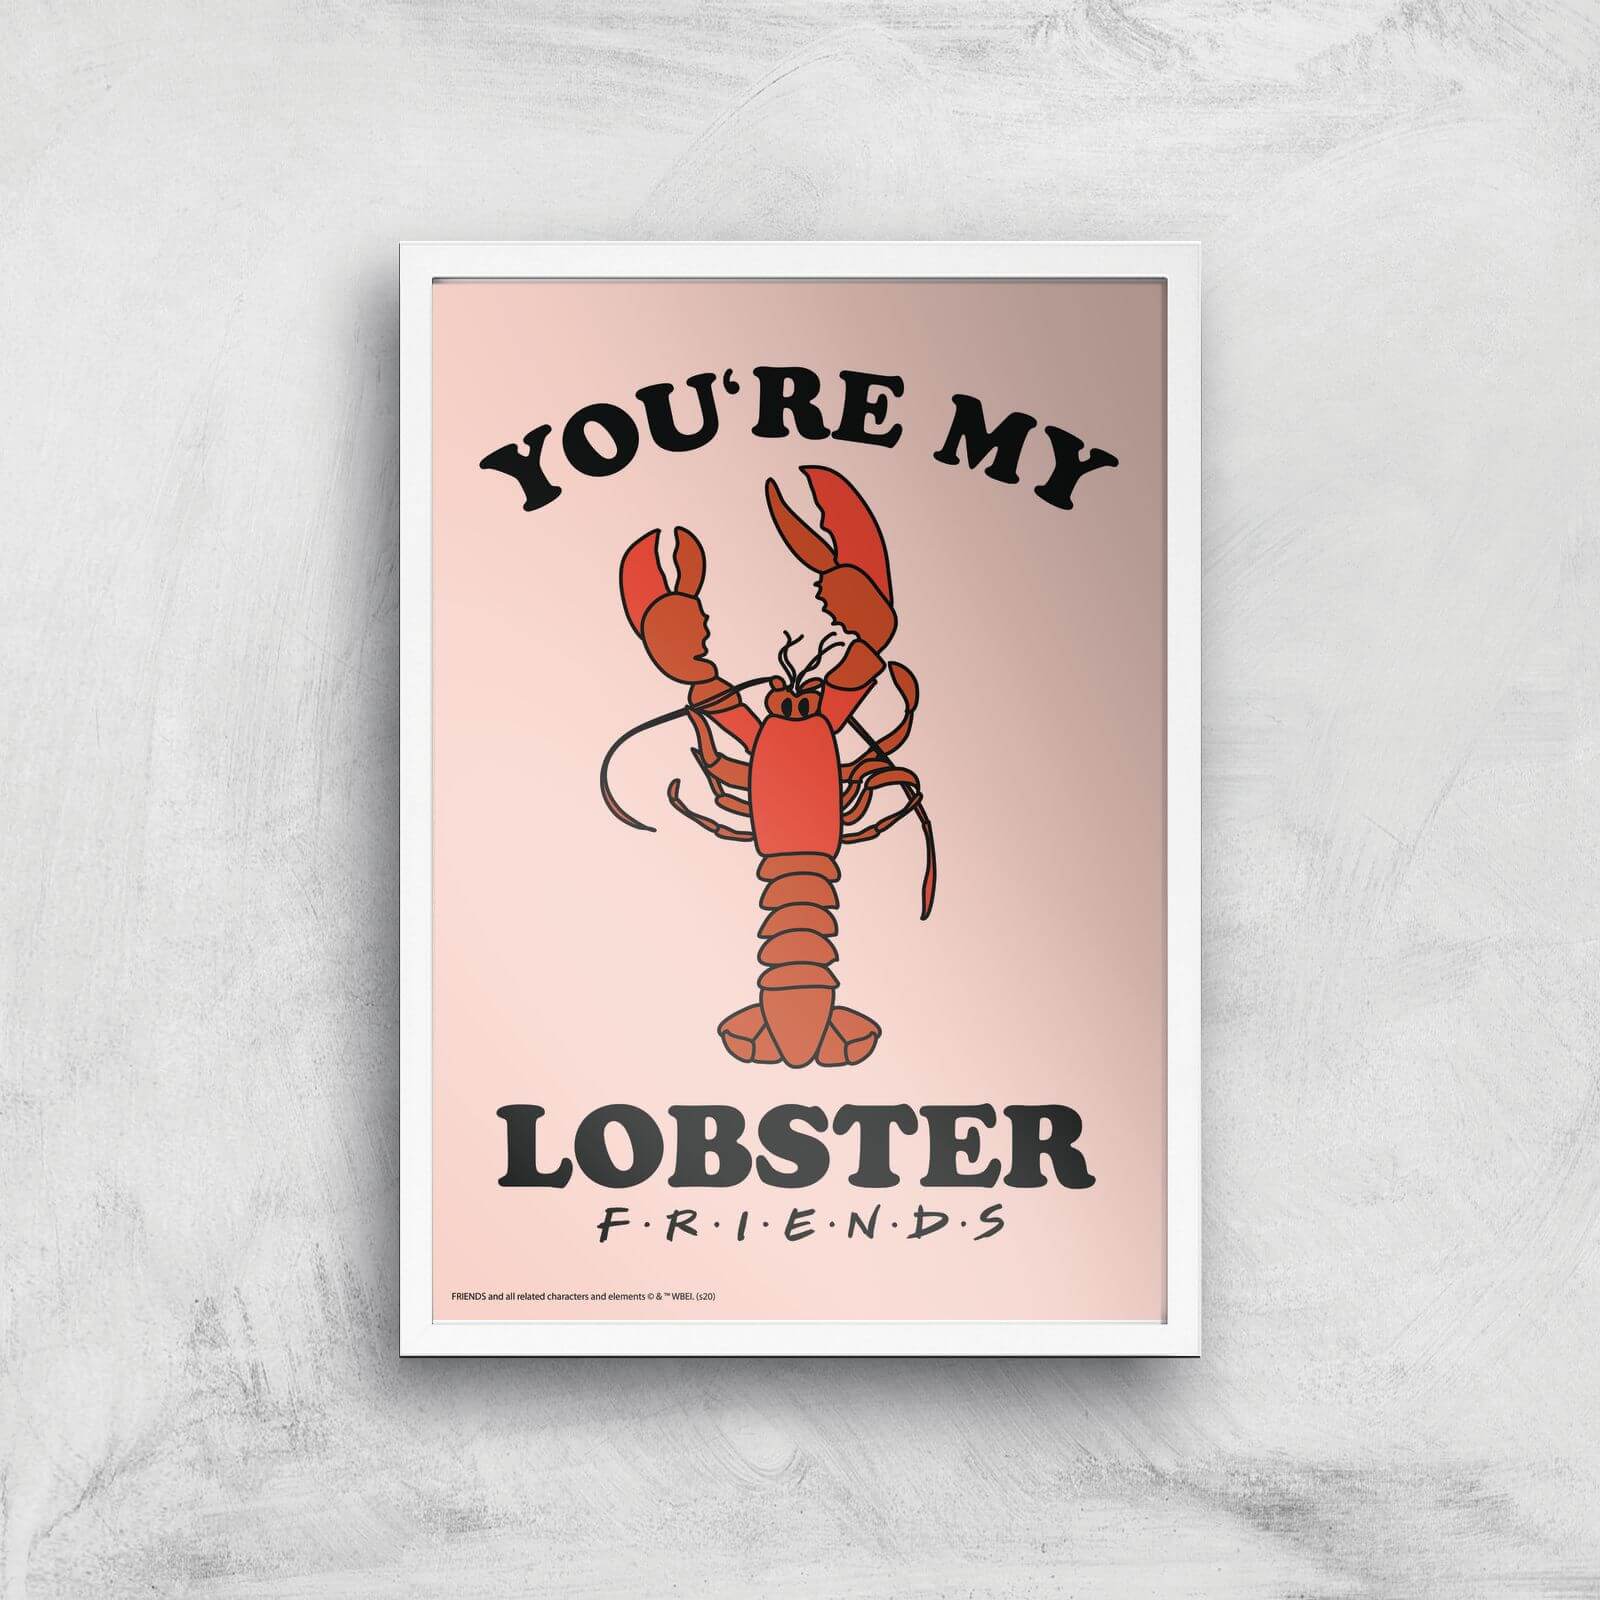 Friends Lobster Giclee Art Print - A3 - White Frame